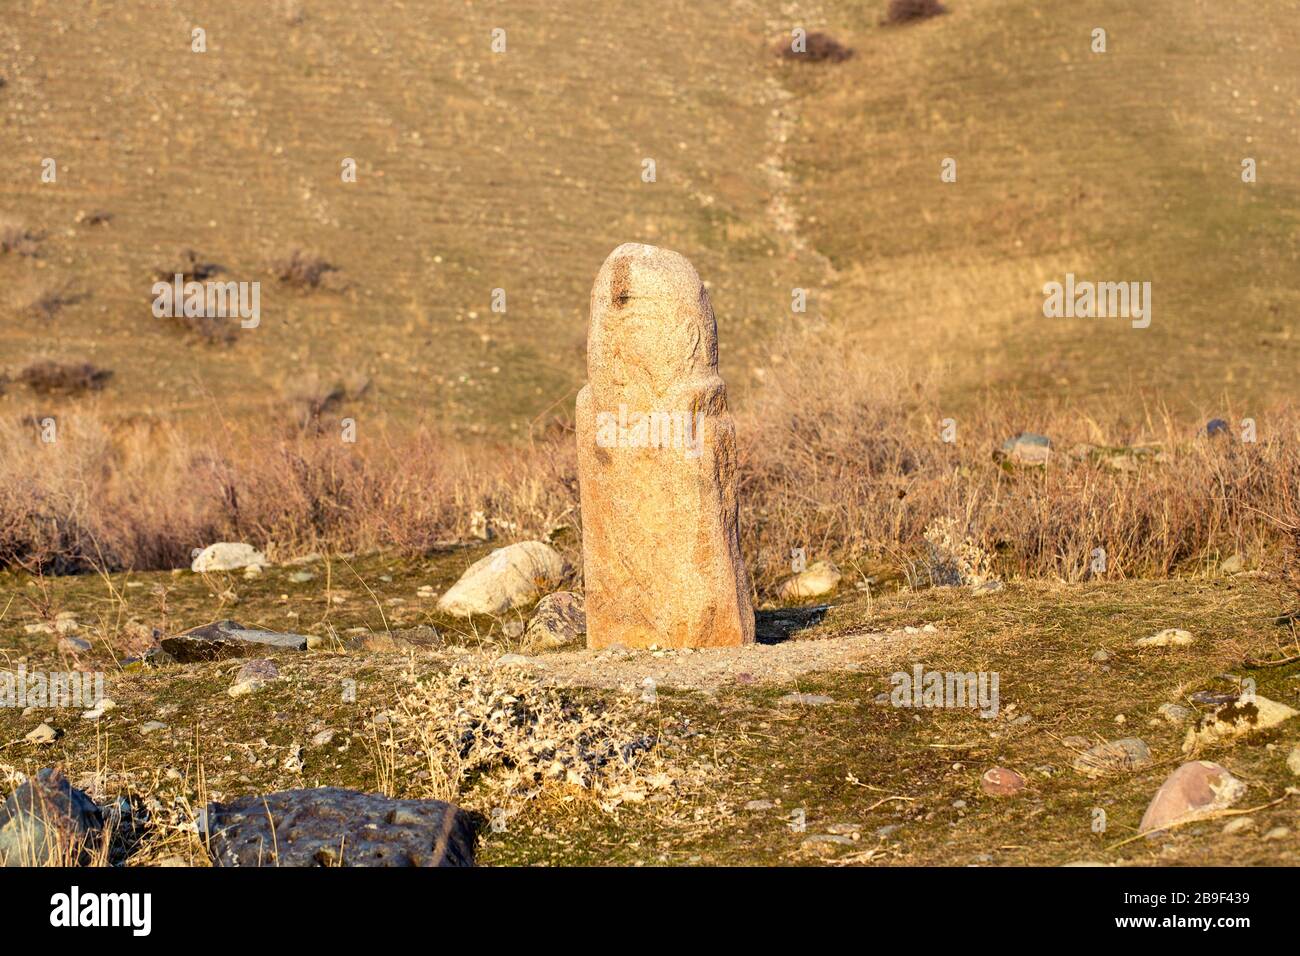 balbal stone warrior. Stone ancient statue Kyrgyzstan. Central Asia. Stock Photo